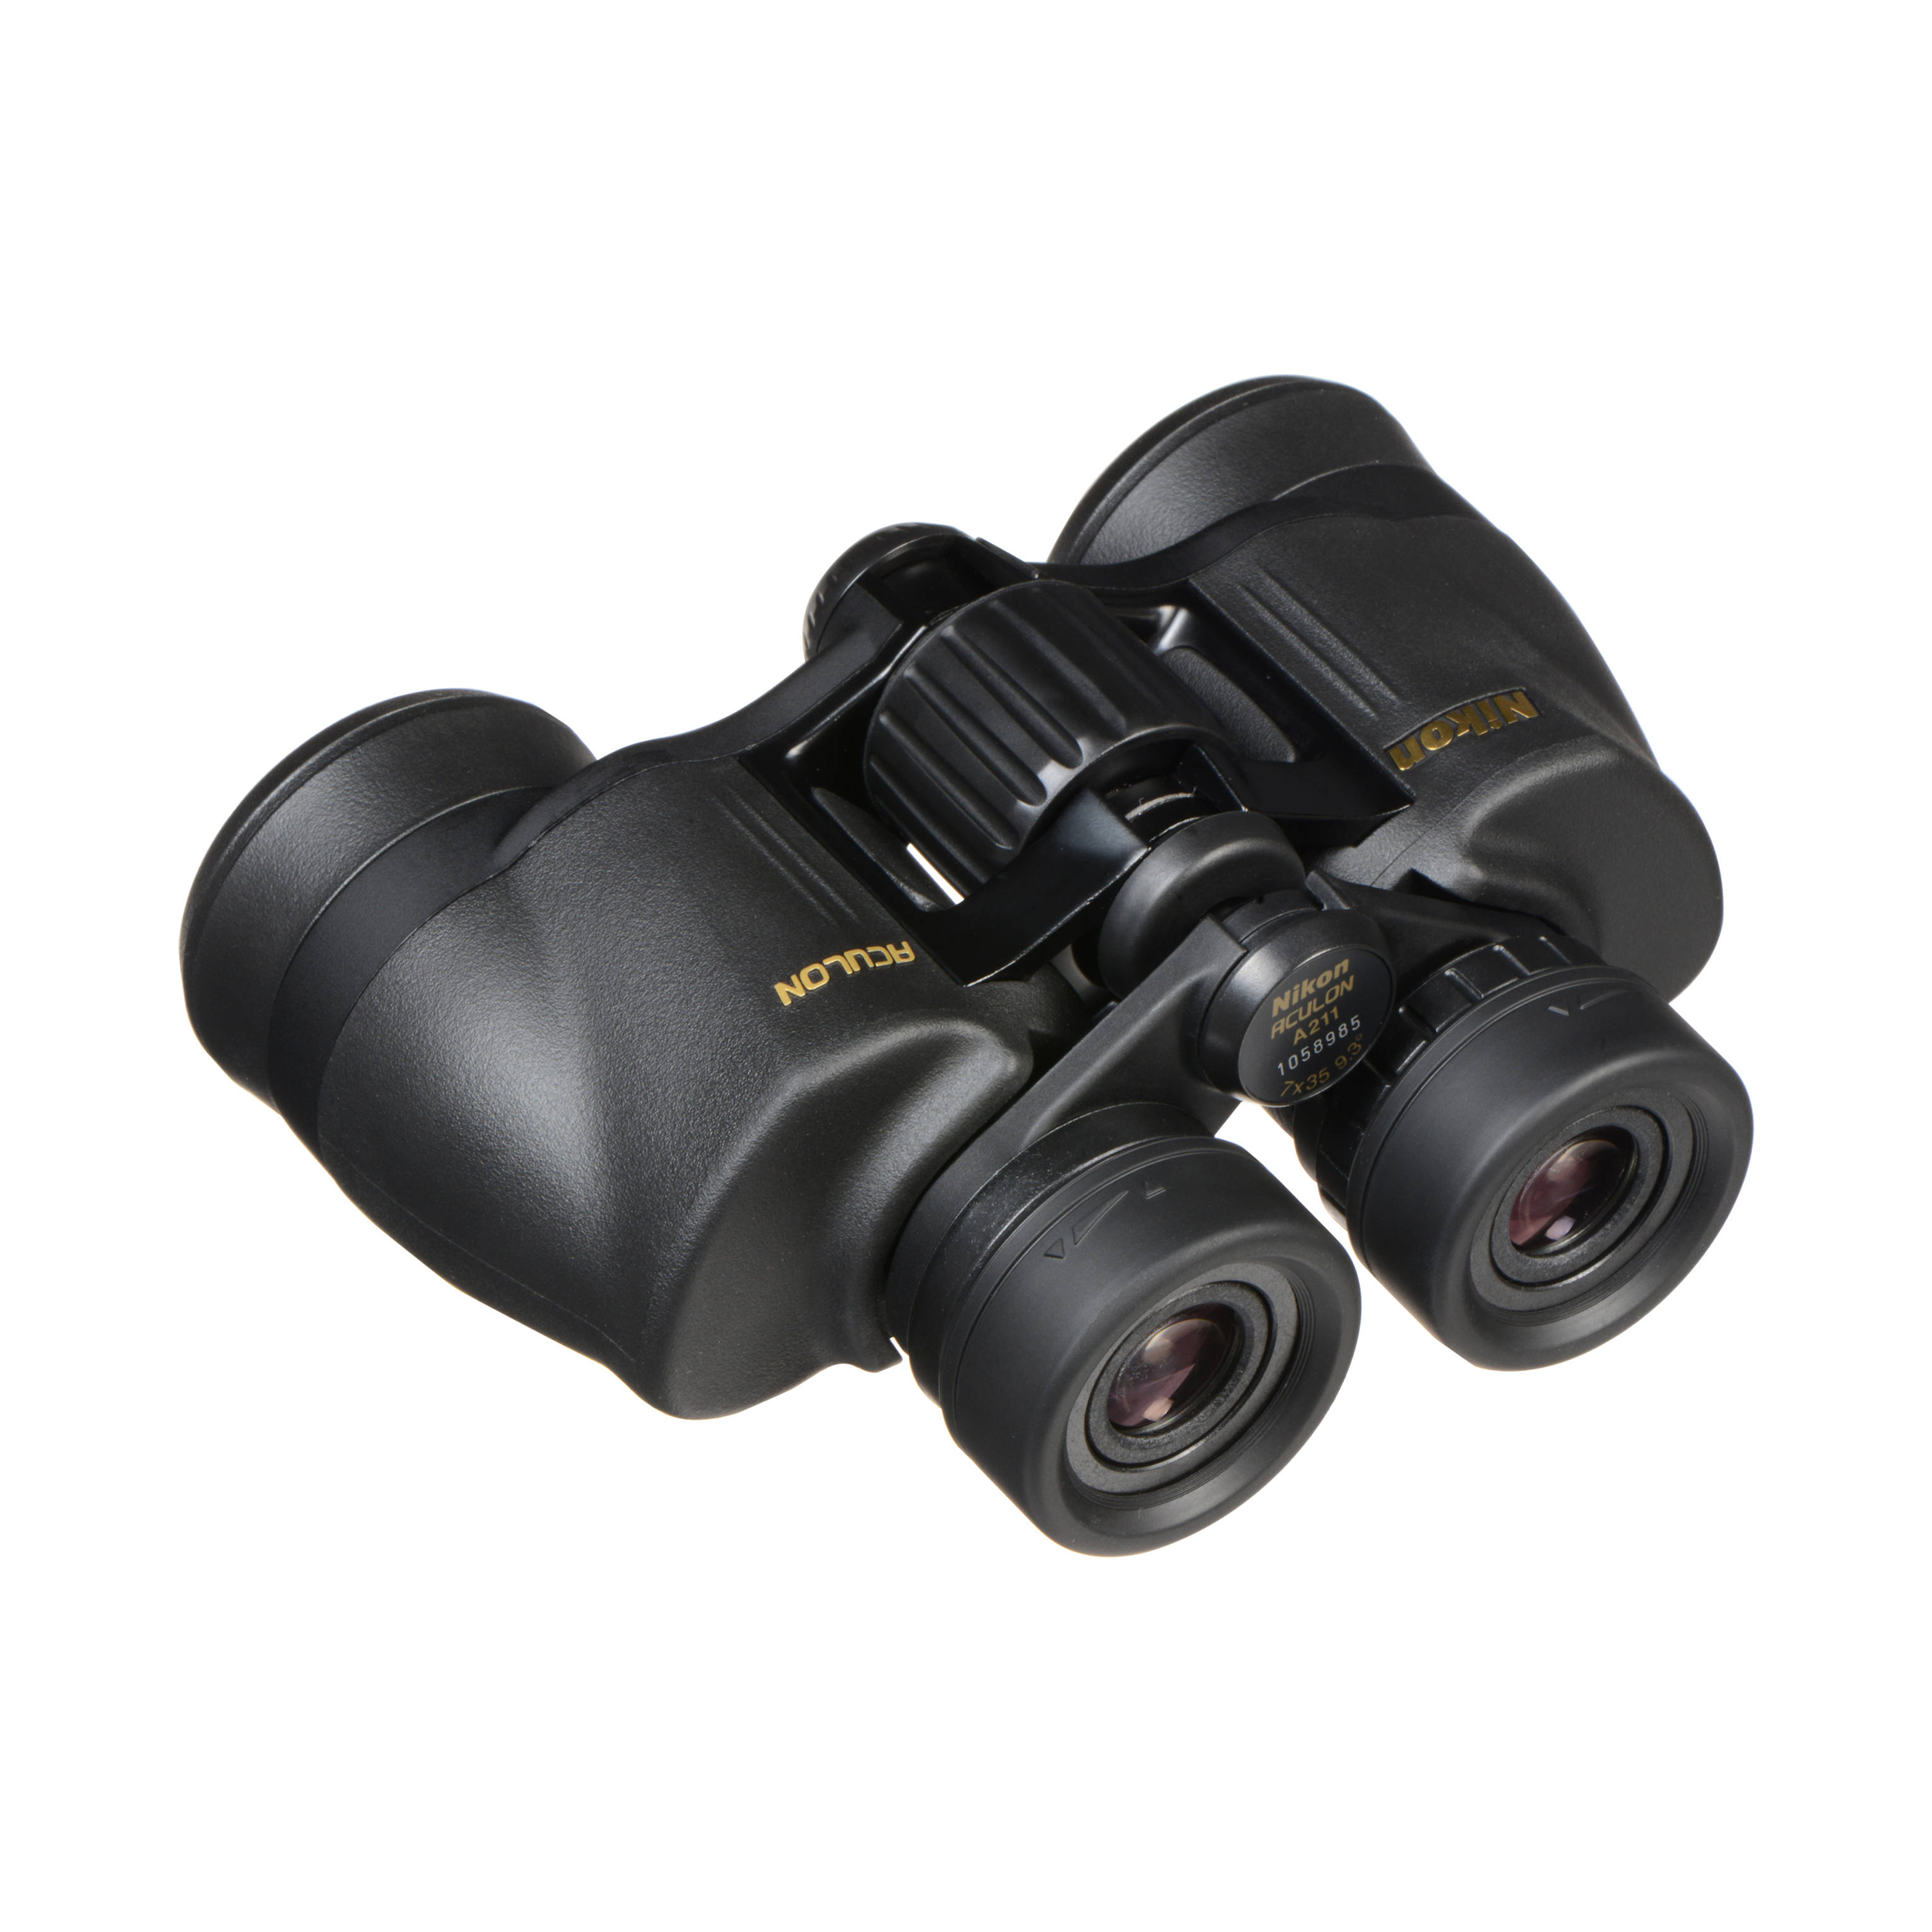 Binoculaires Nikon Aculon A211 7x35